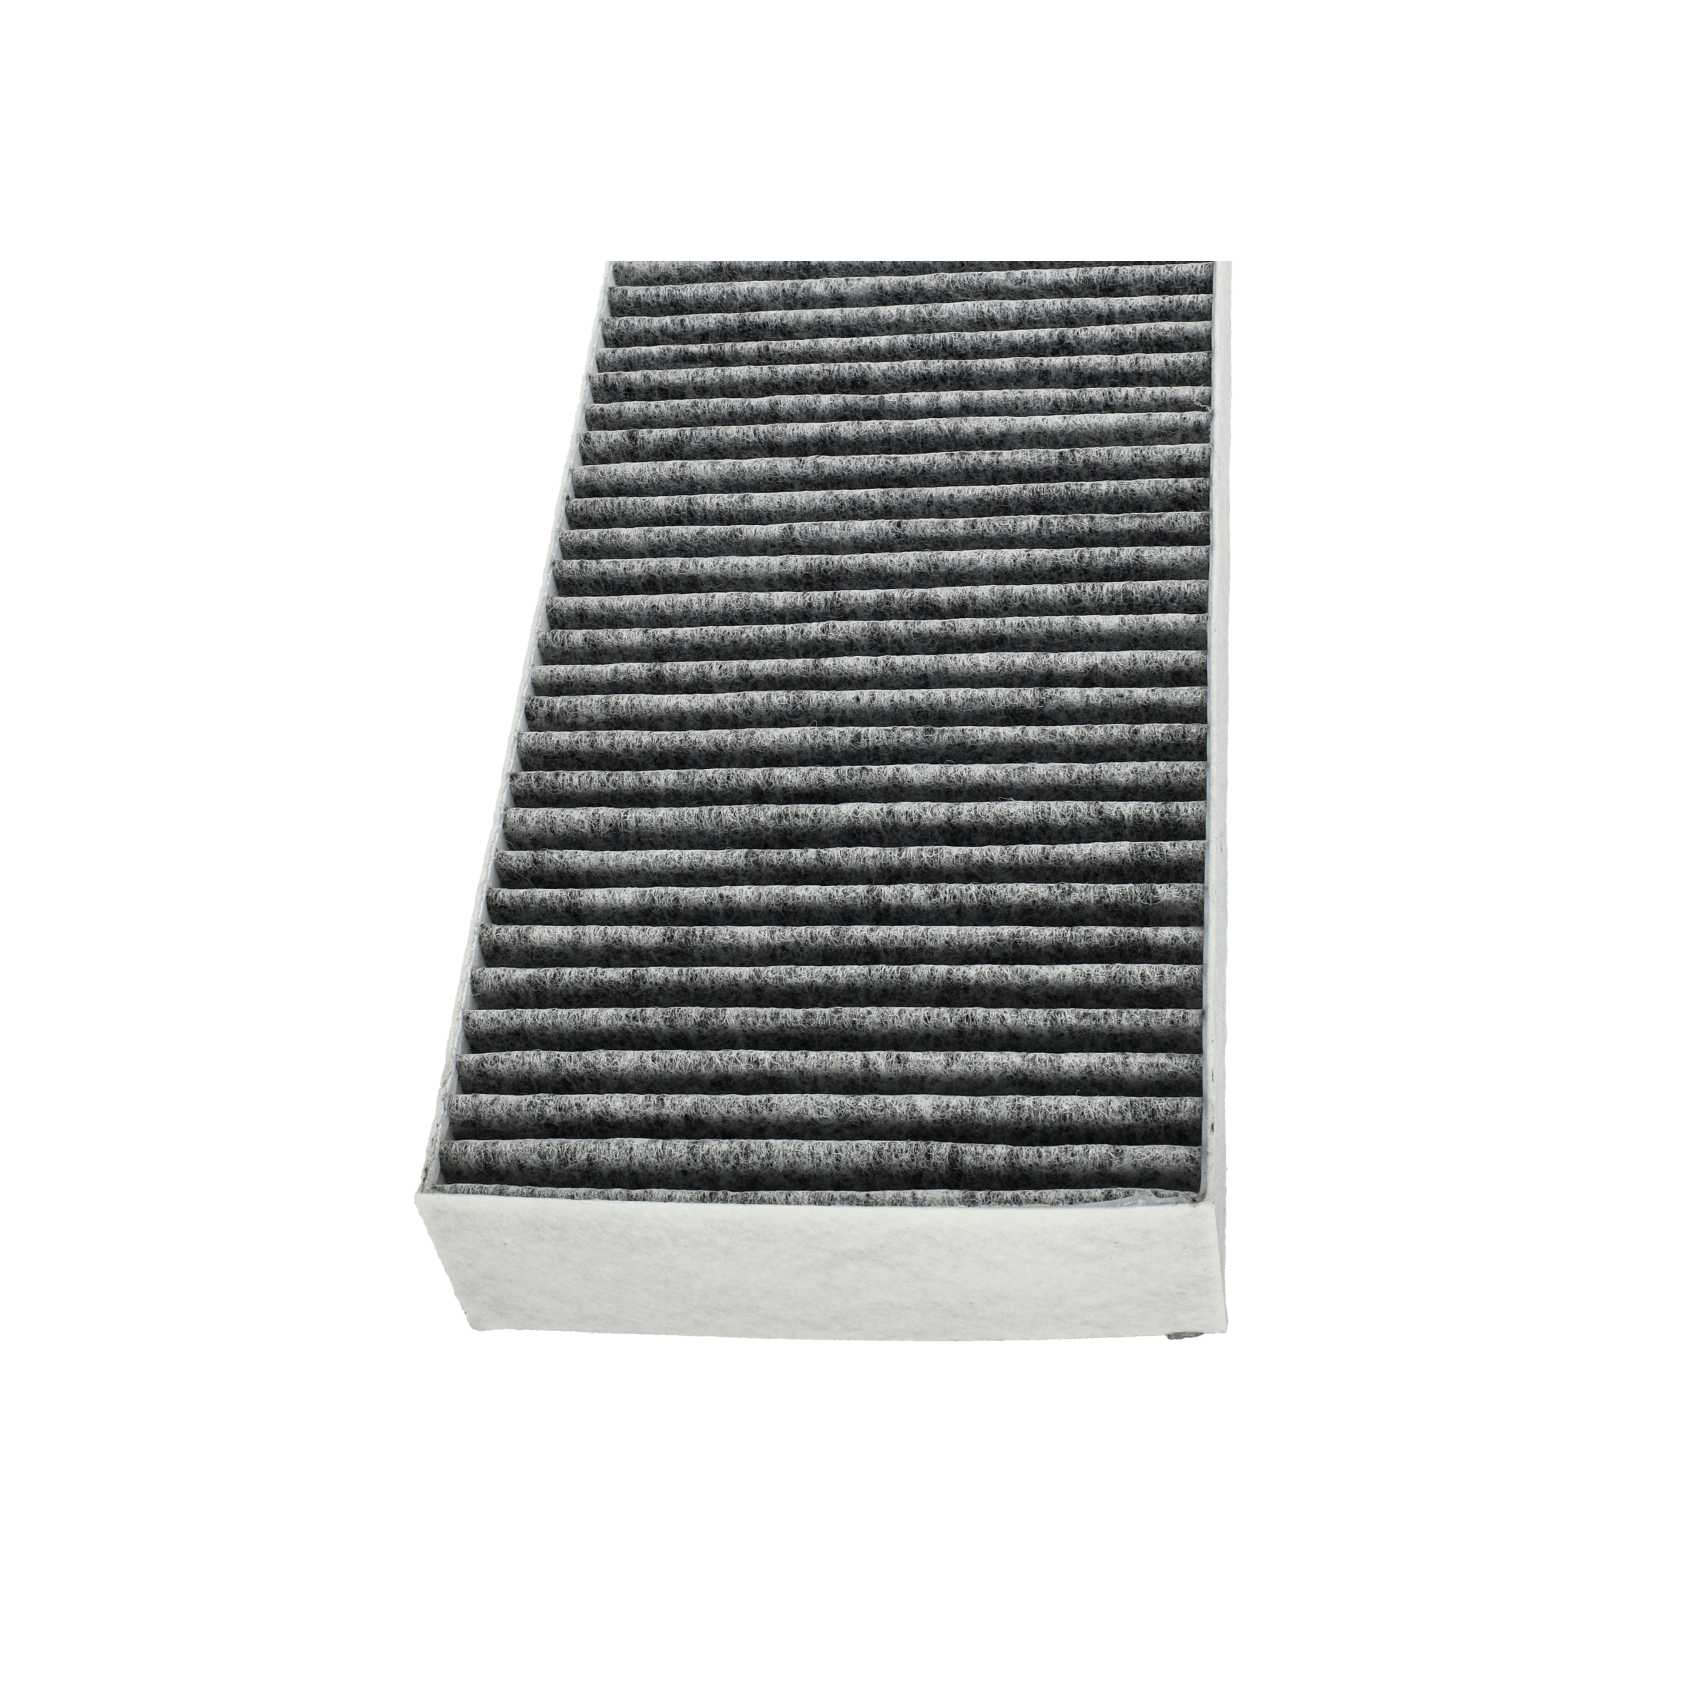 4x Filtro de carbón activado reemplaza Bora BAKFS, BAKFS-002 para campanas - 34 x 12,2 x 4,25 cm